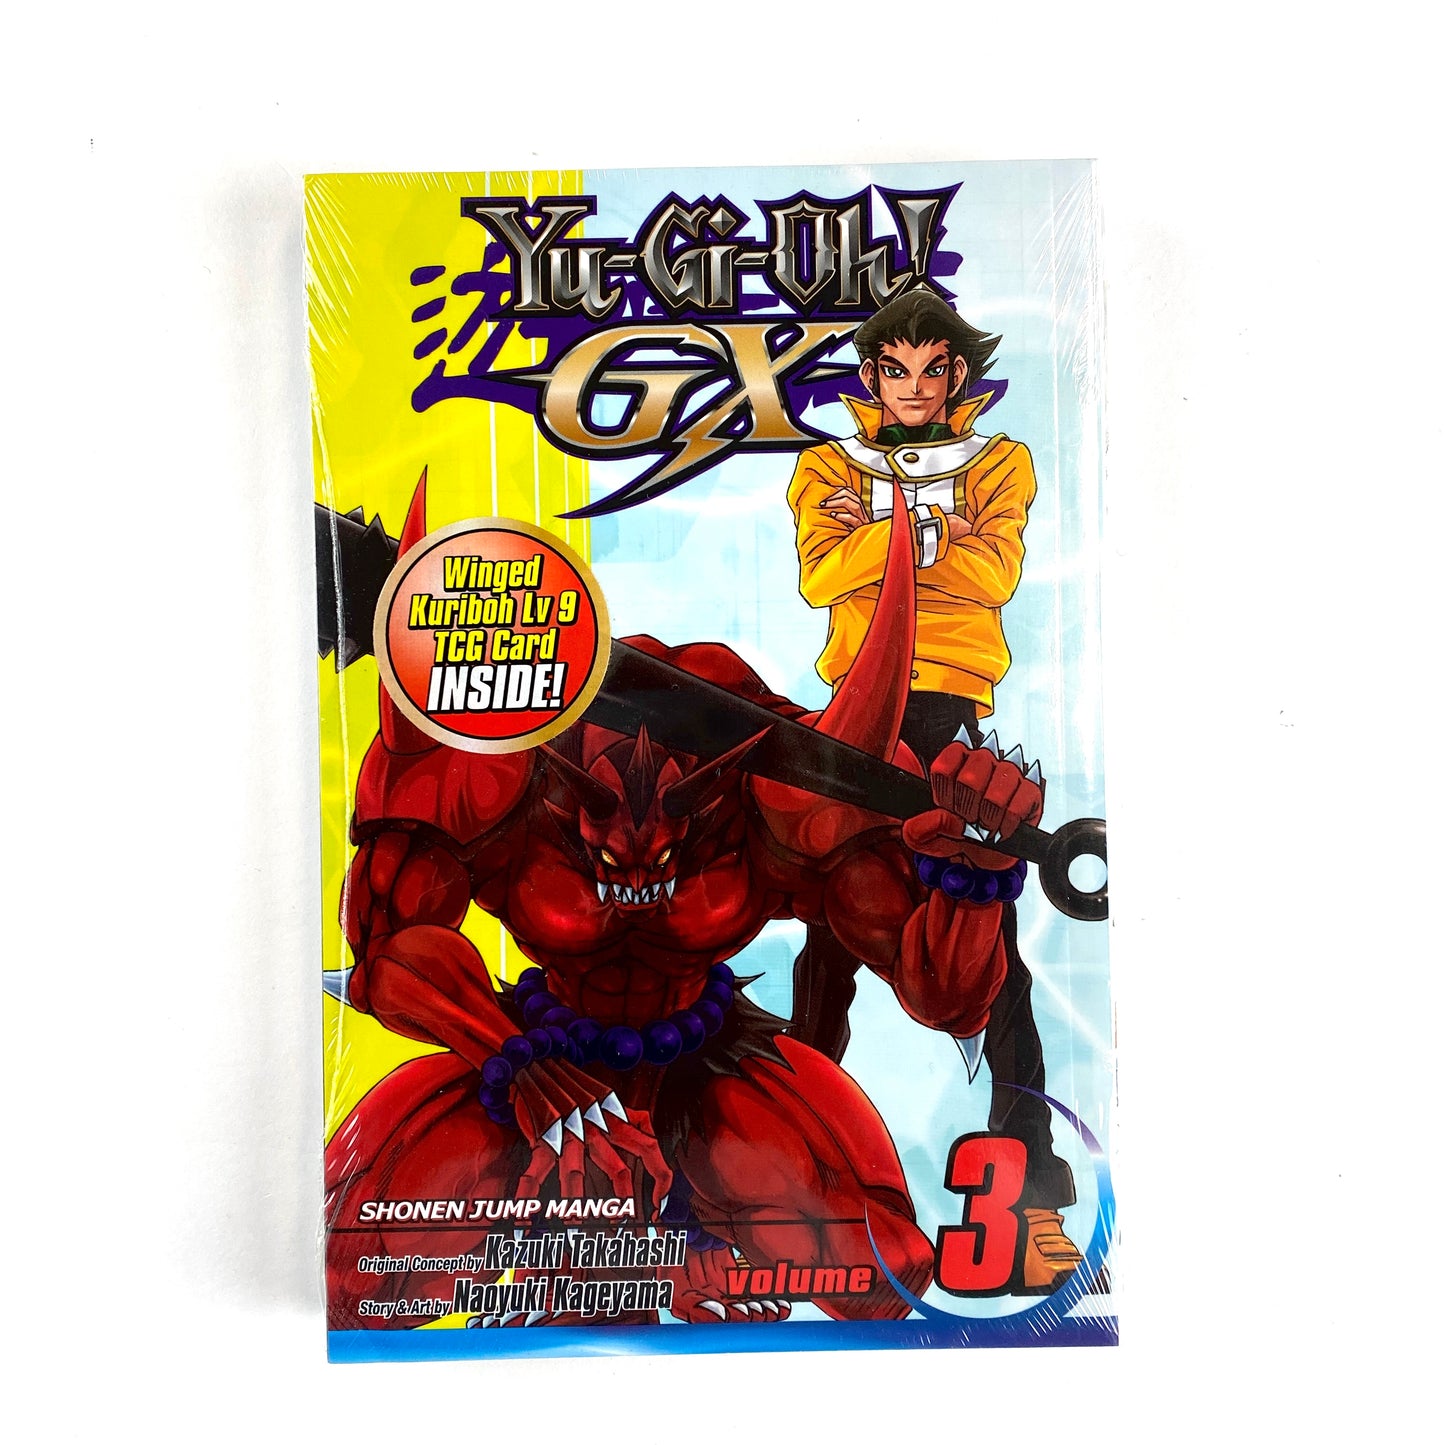 Yu-Gi-Oh! GX Volume 3, inc. WINGED KURIBOH LV9